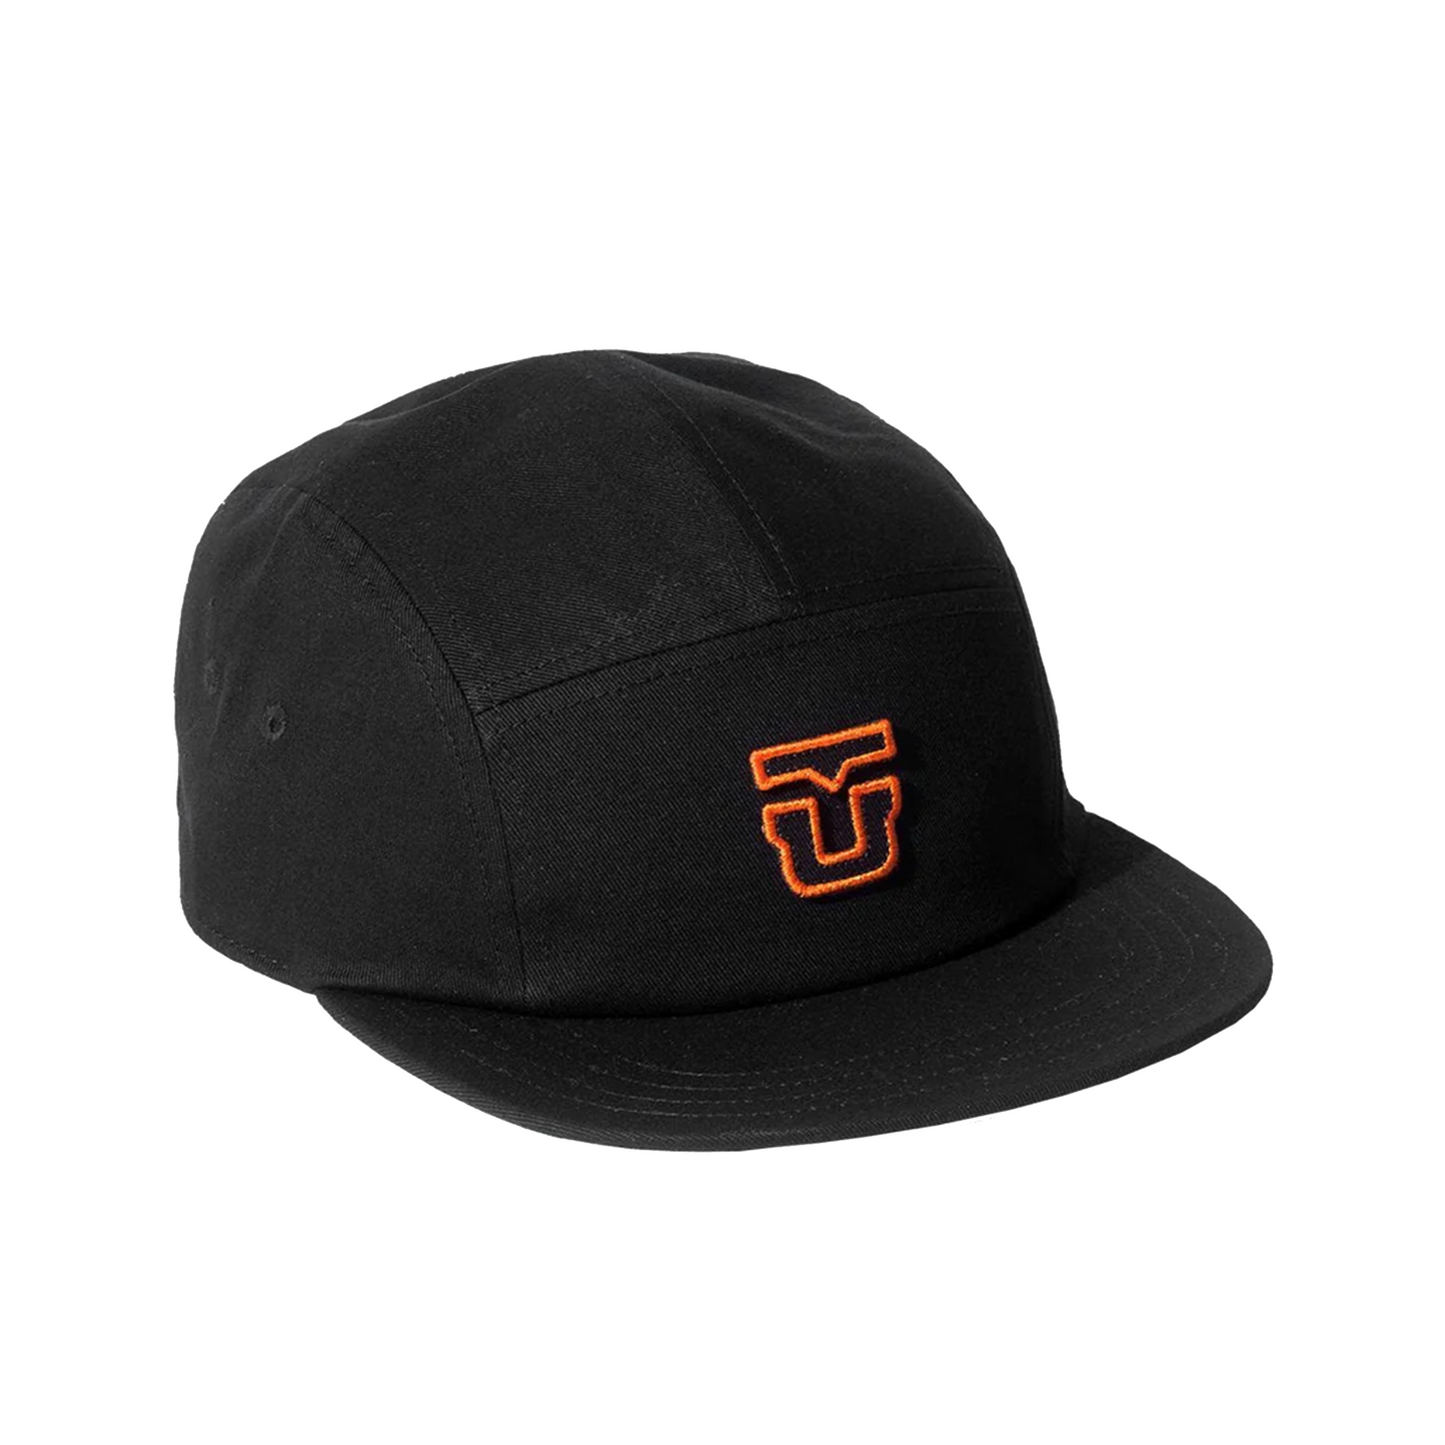 Union 5-Panel Hat Black Orange OS - Union Hats